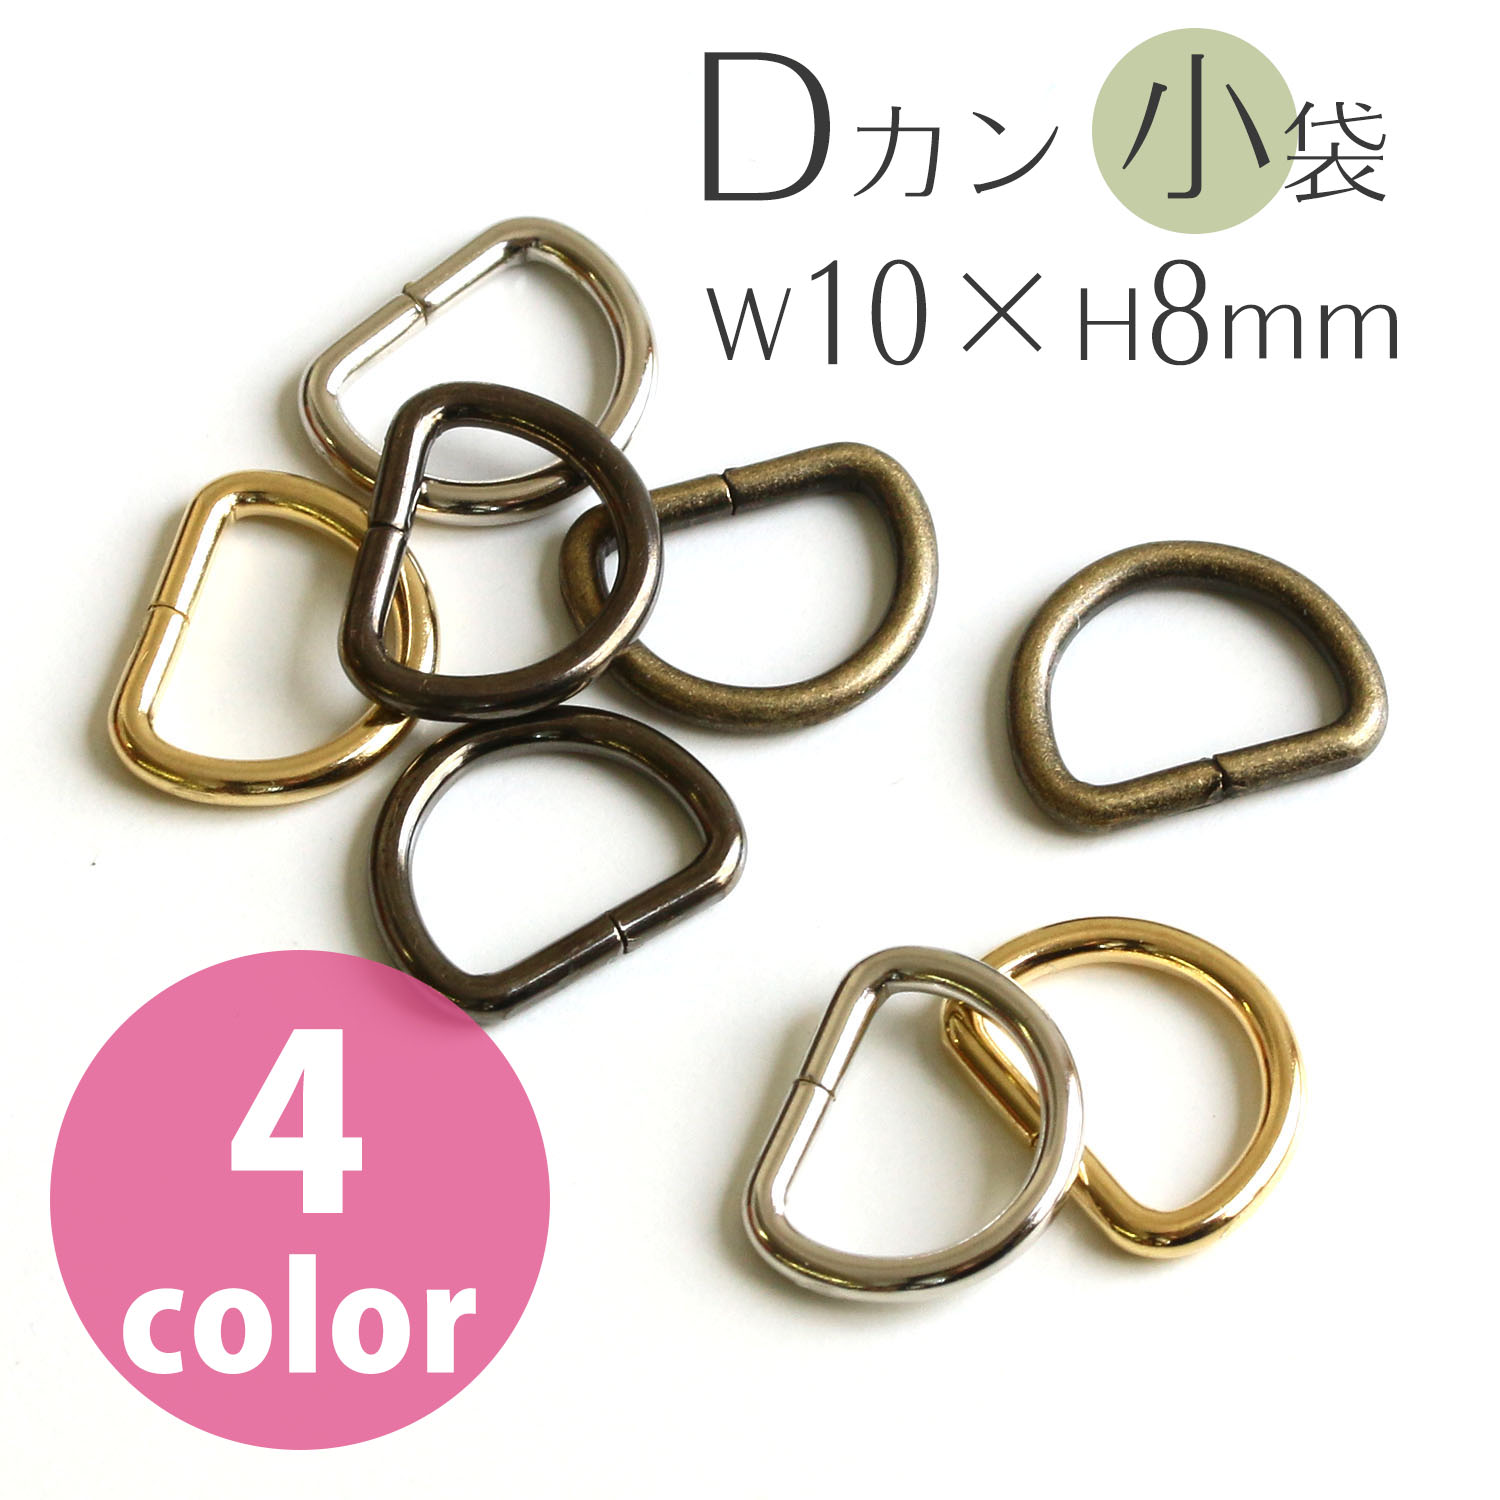 S22 D-Ring  10 x 8mm"", diameter 1.8mm (bag)